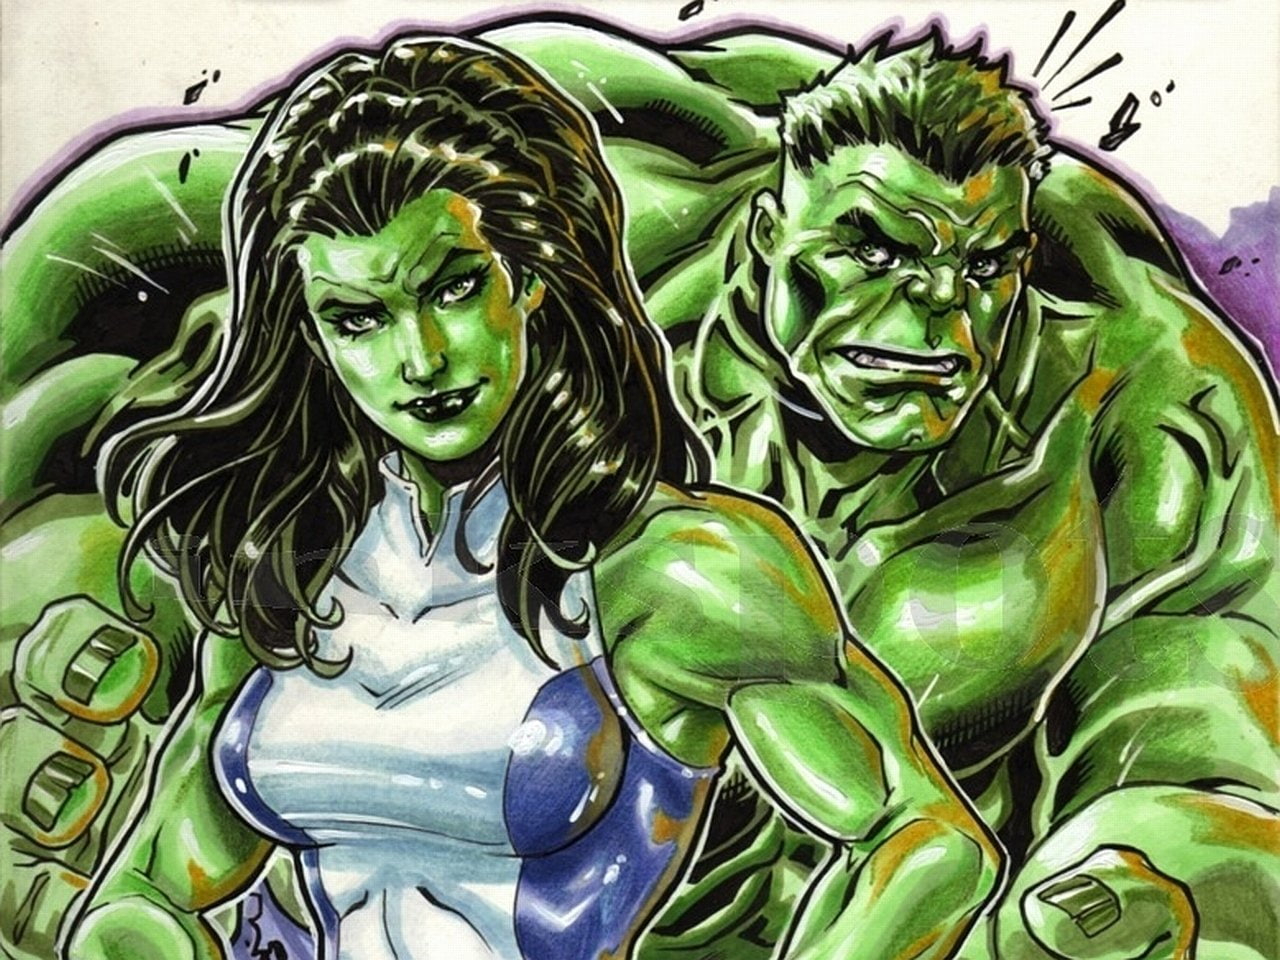 Wallpaper Comics, She Hulk 1280x960px 720p